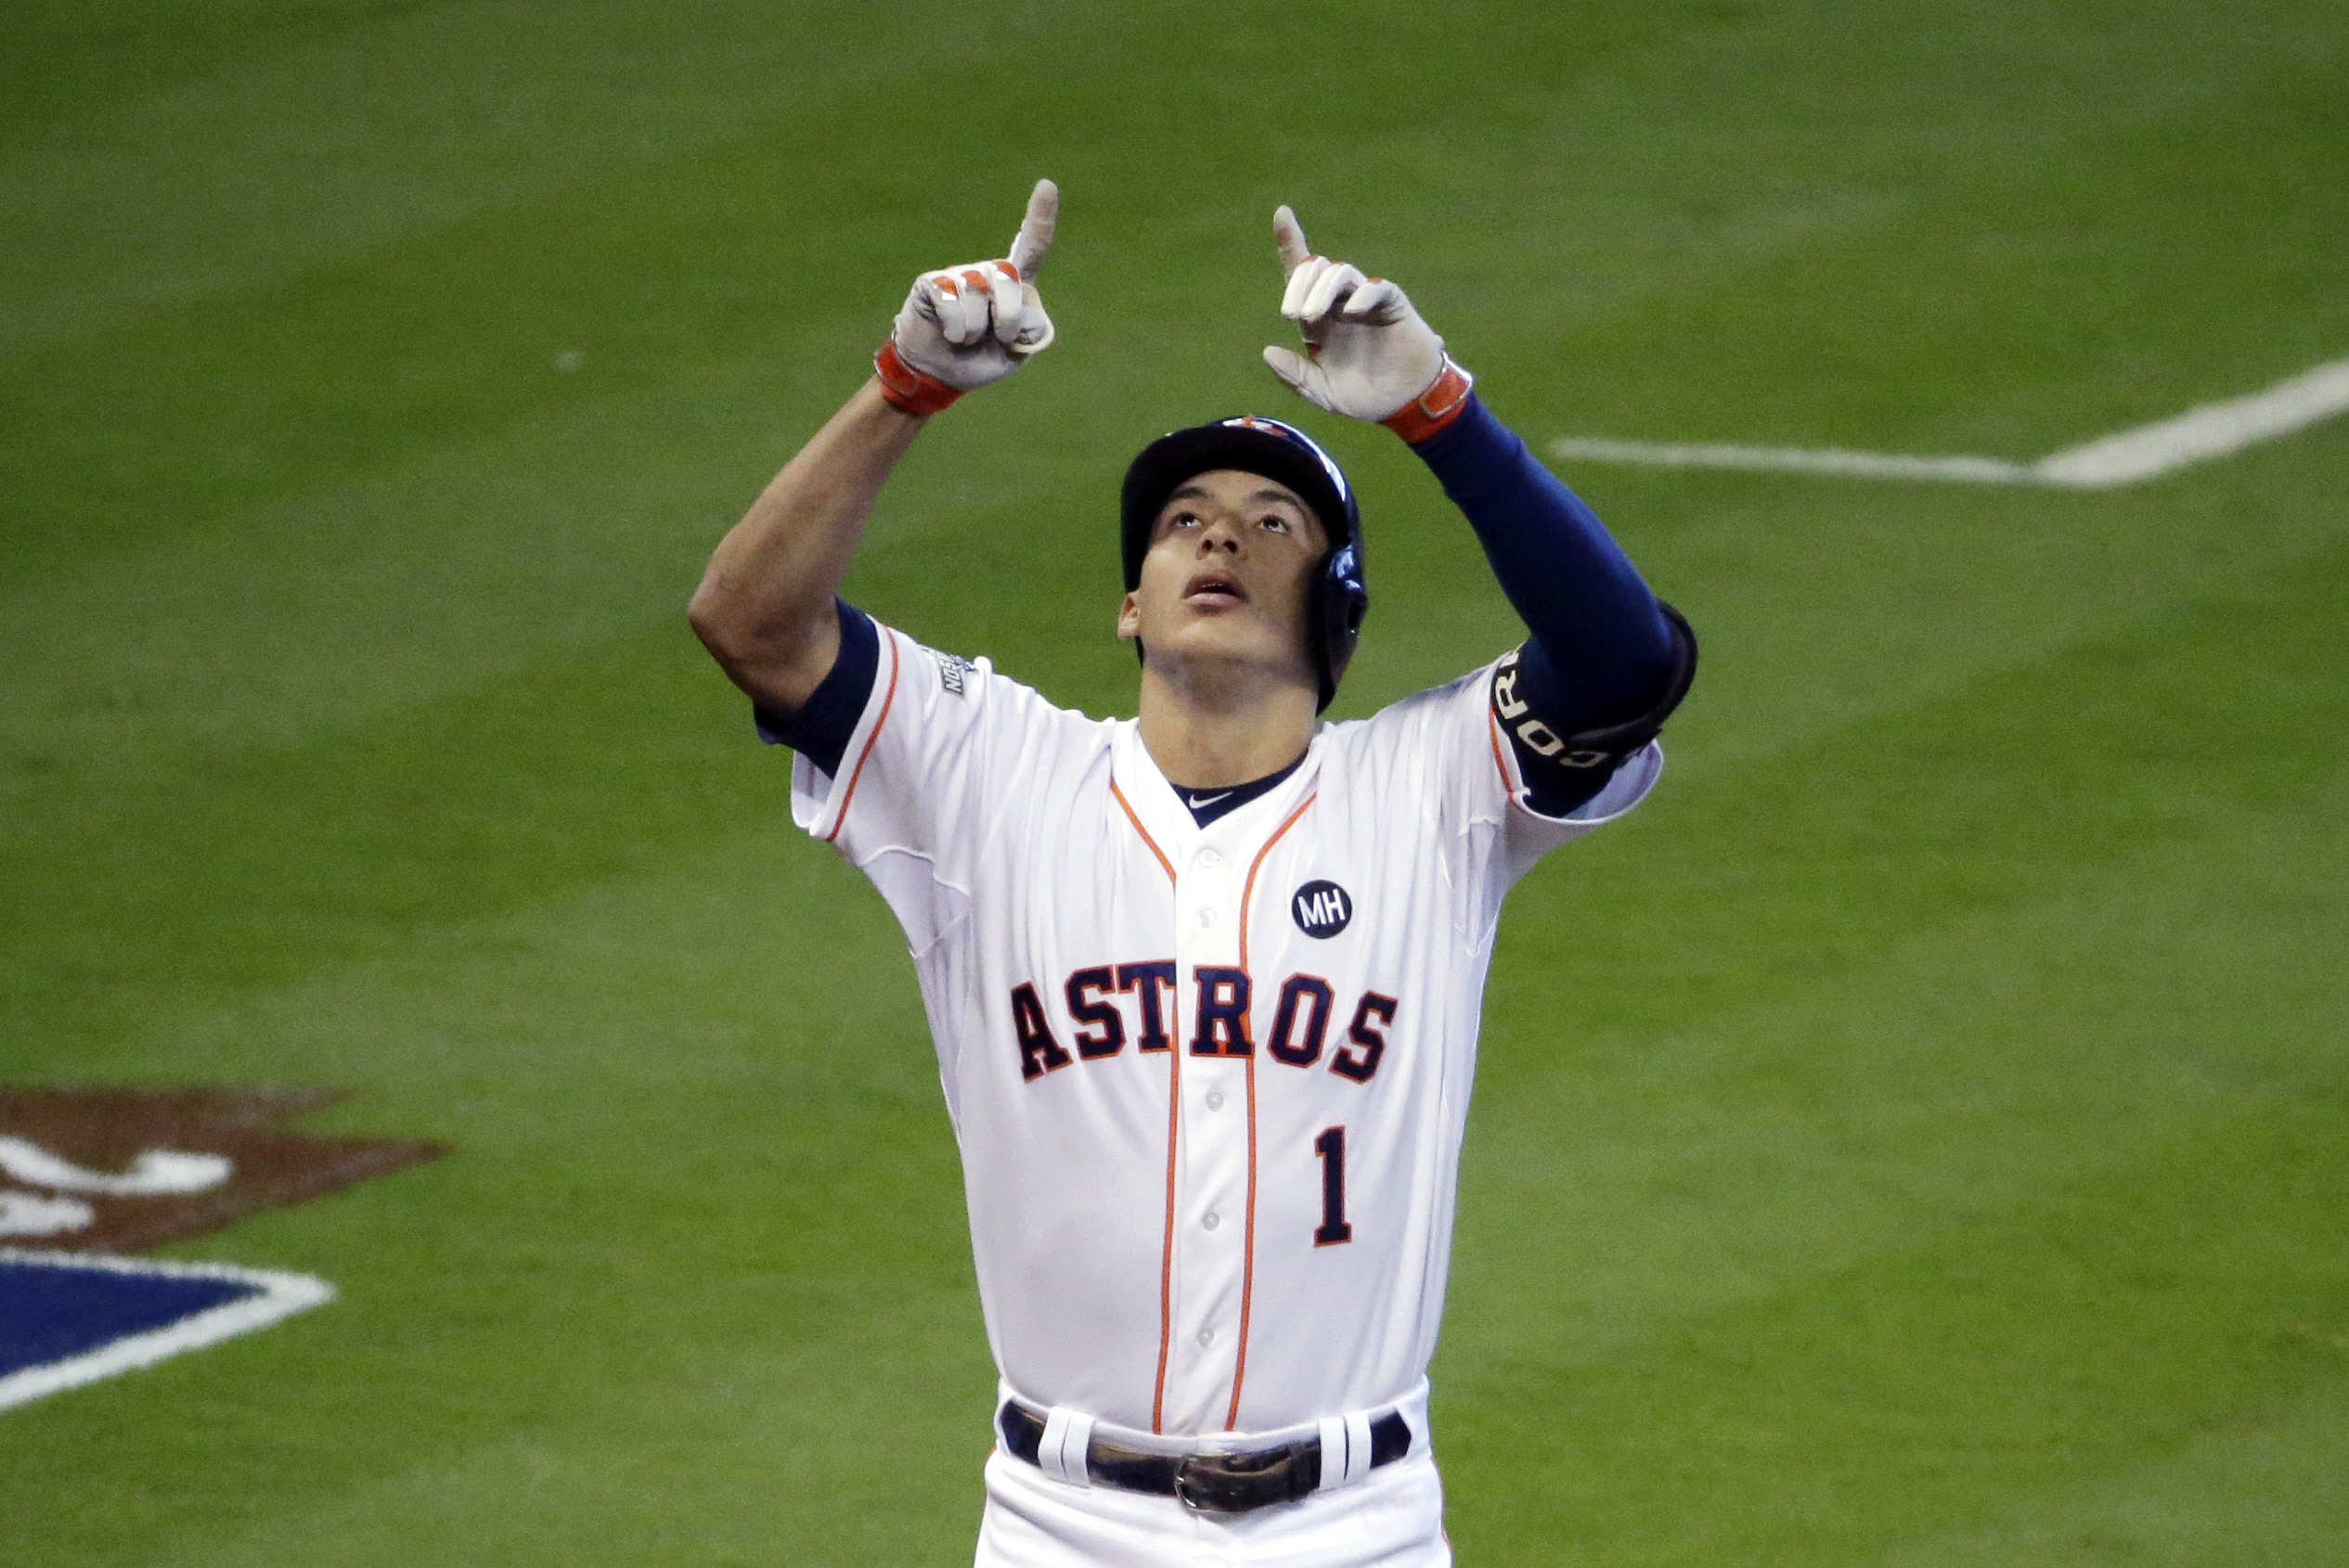 Houston Astros - Happy birthday to #Astros pitcher, Dallas Keuchel